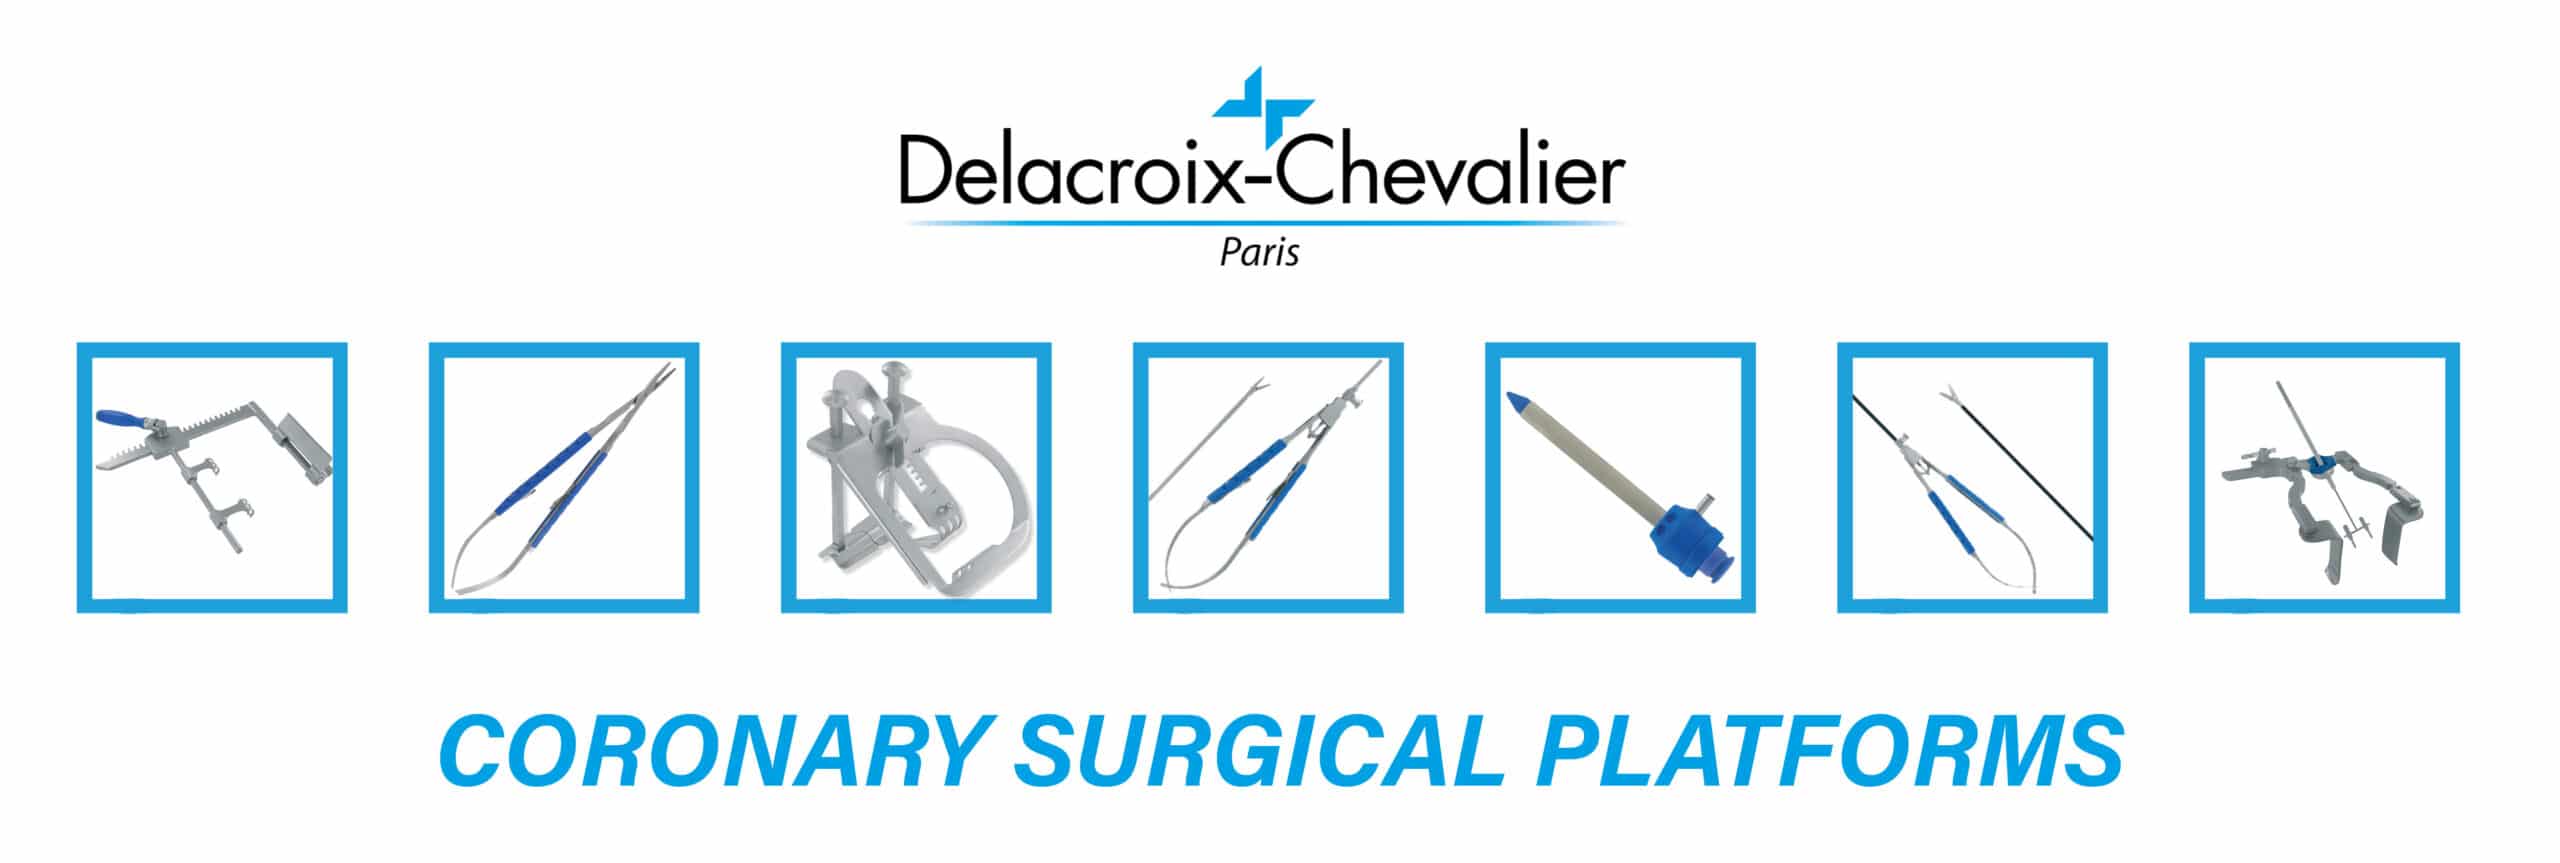 Delacroix-Chevalier Coronary instruments and retractors in square boxes